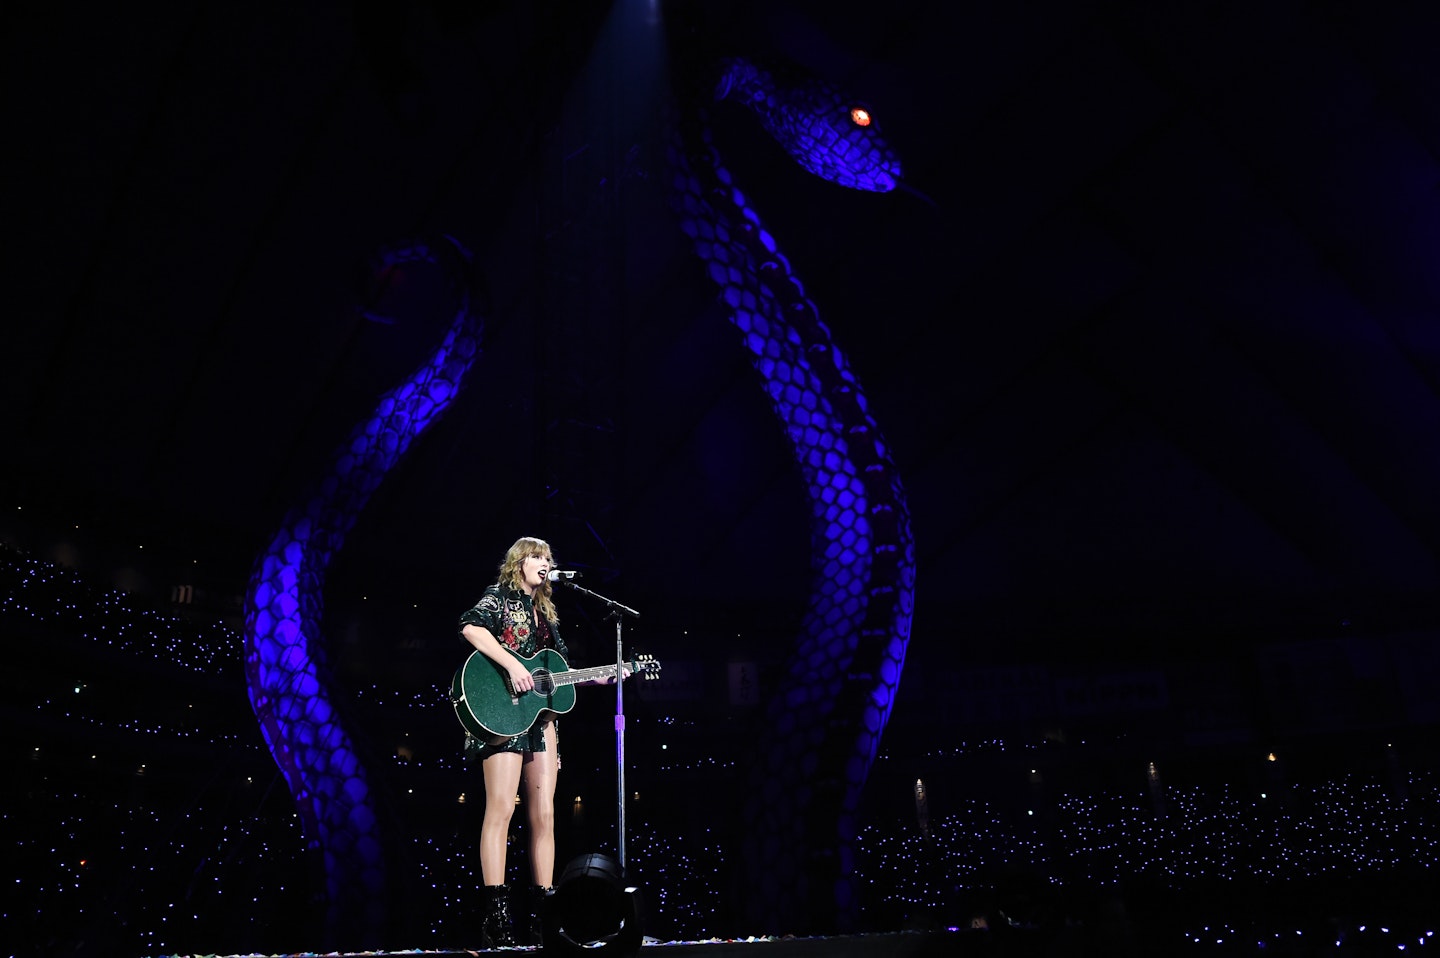 Taylor Swift Reputation tour